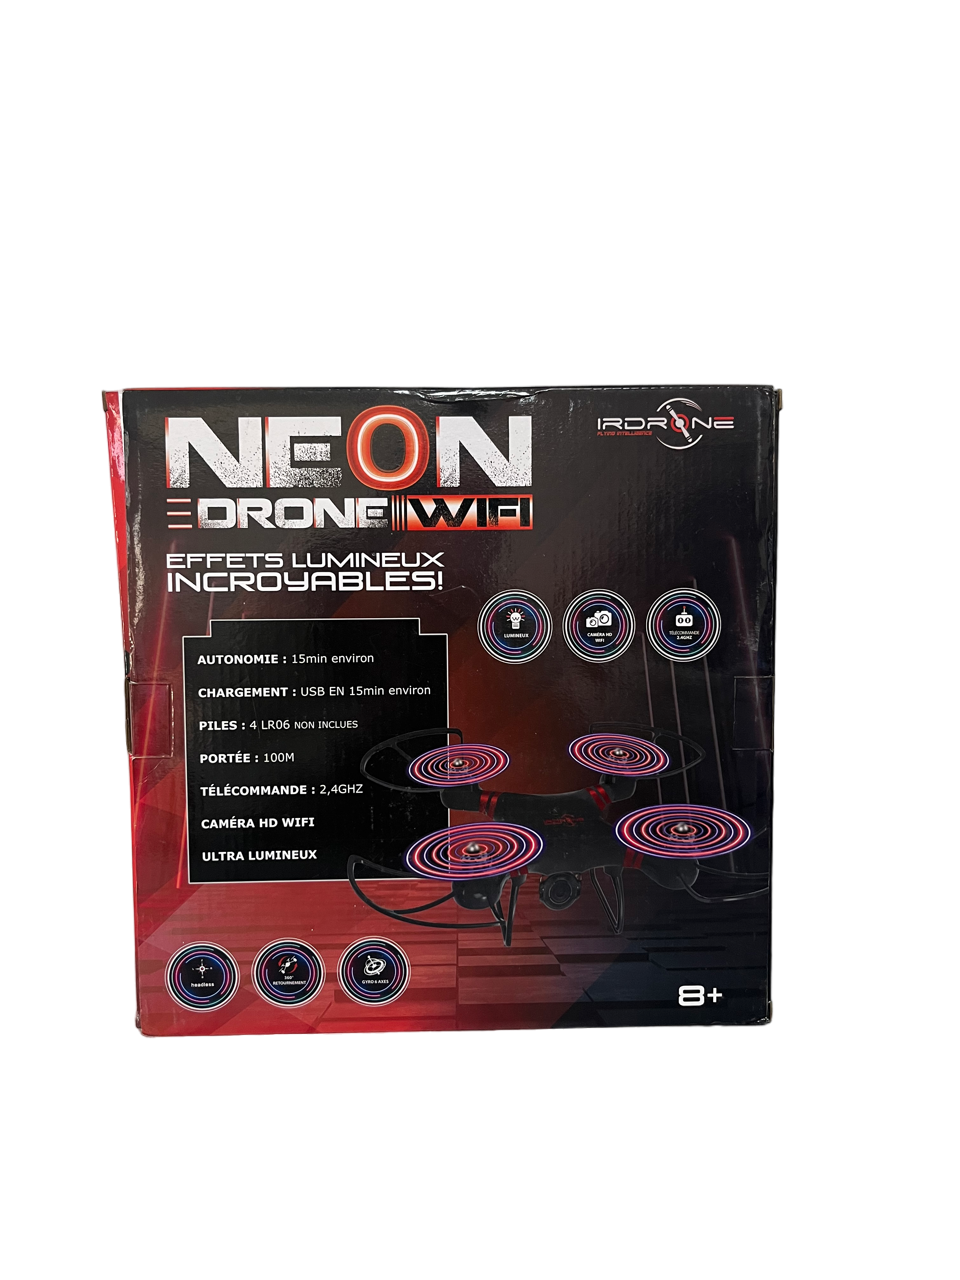 Neon Drone WIFI